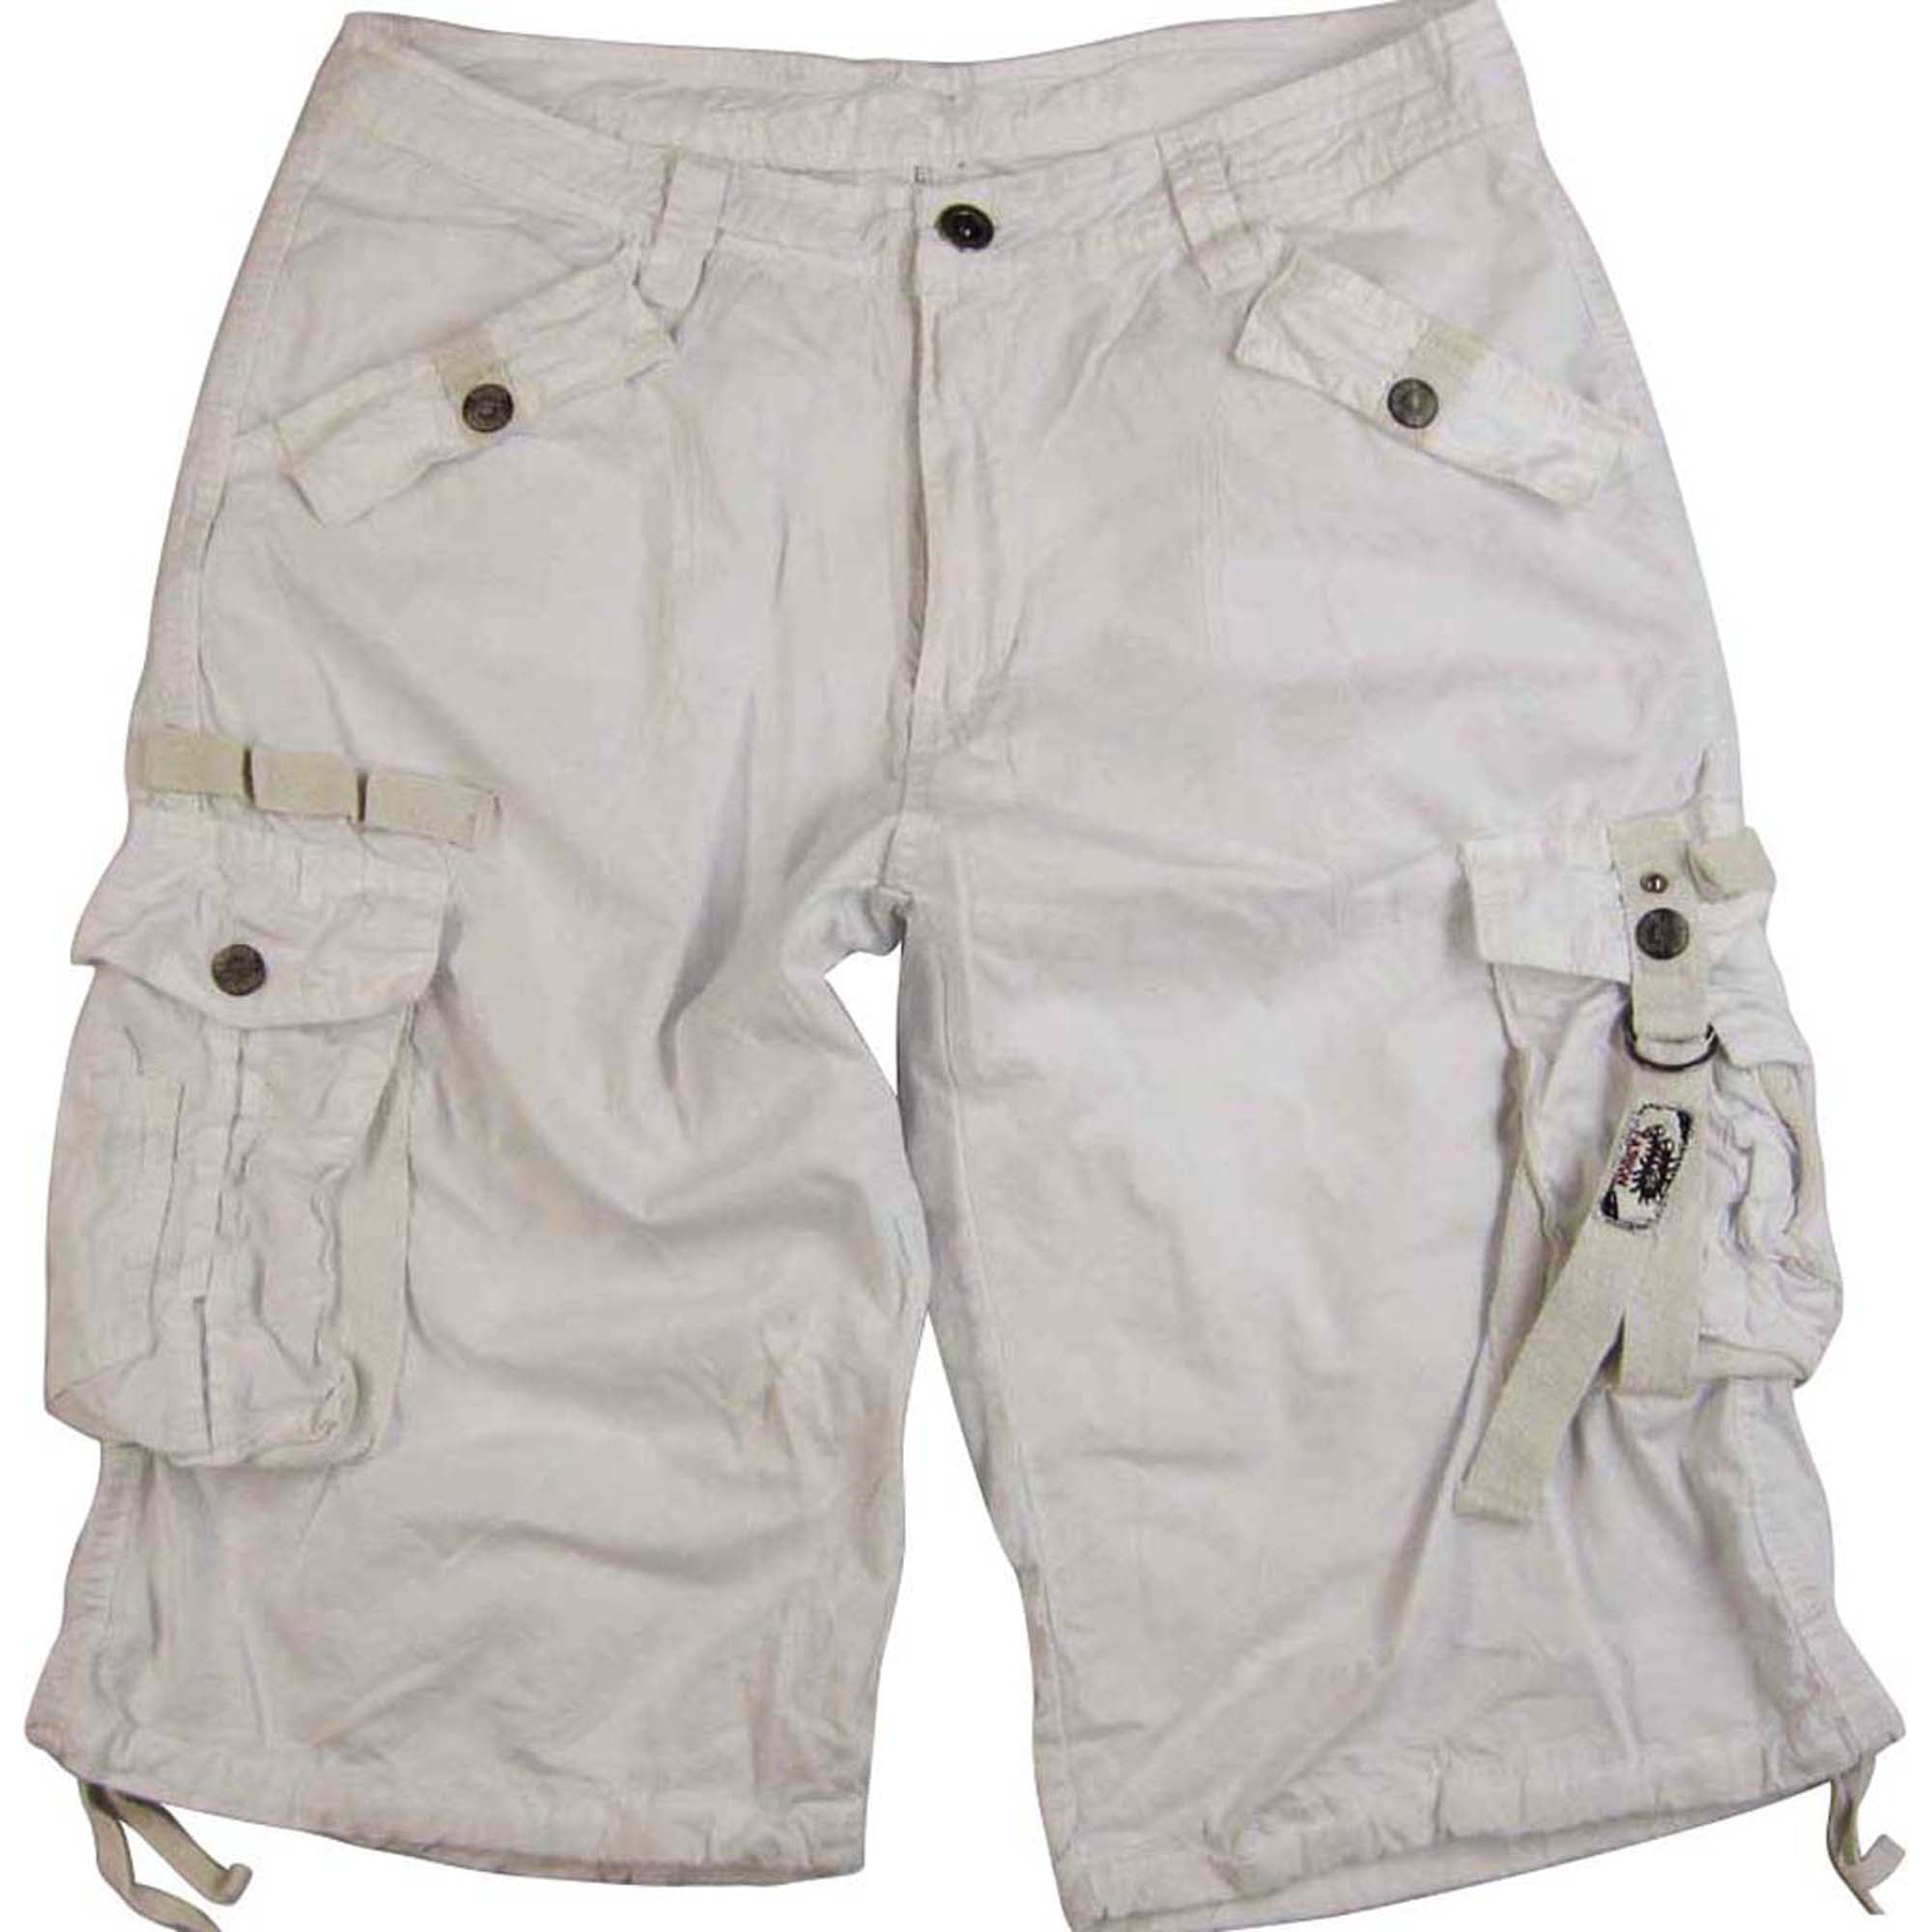 Mens Military White Cargo Shorts 1104 Size 30